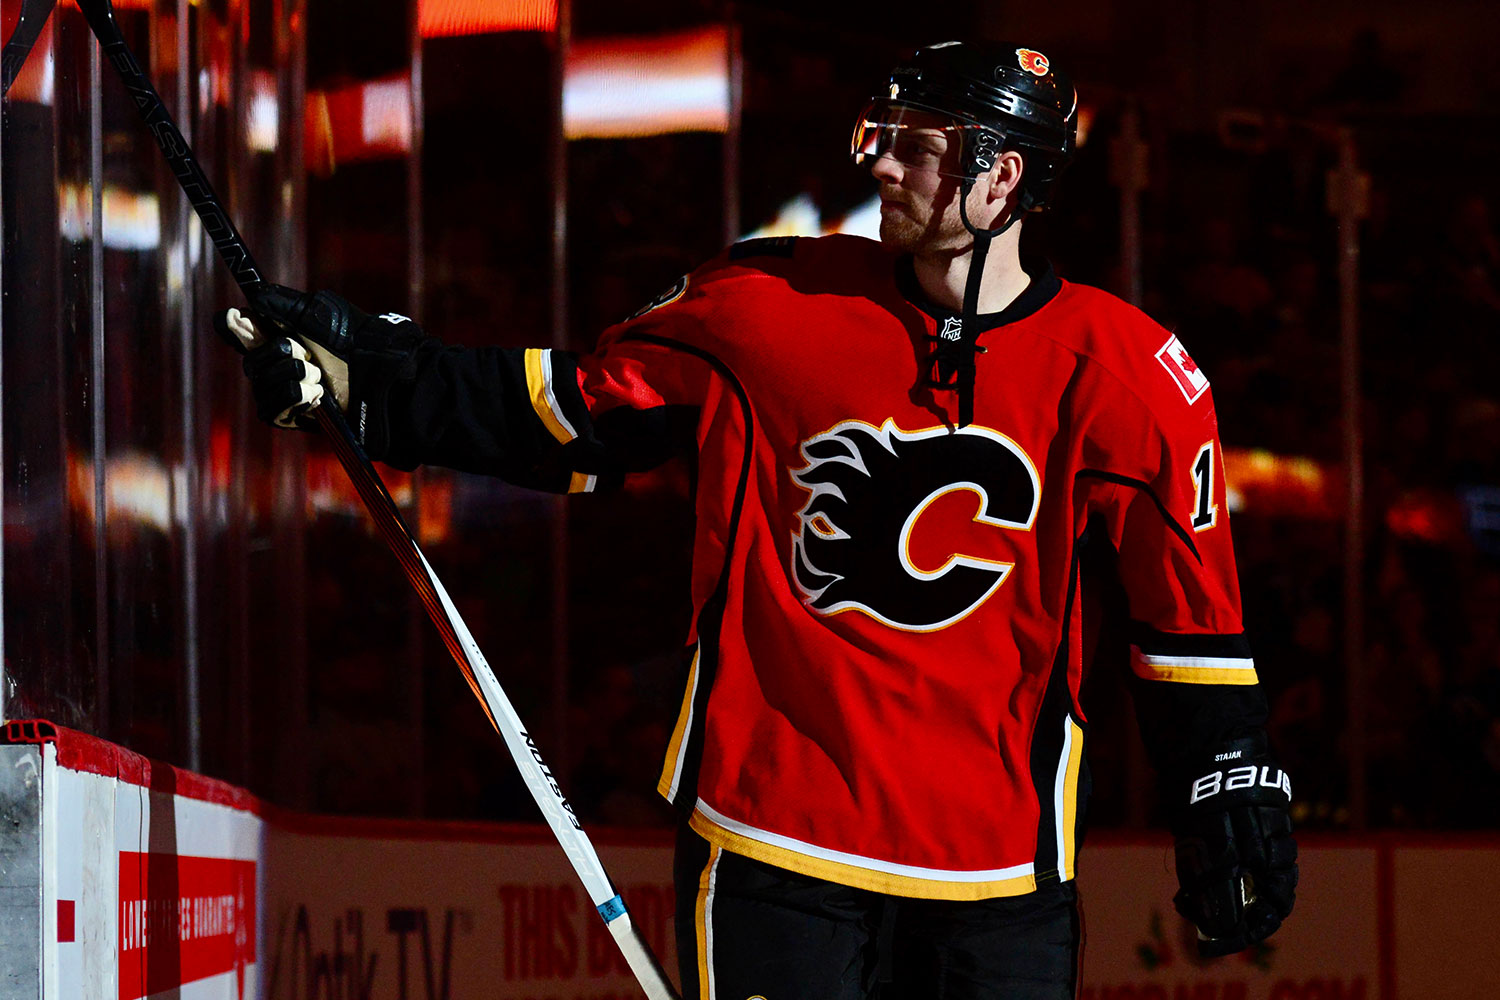 Calgary Flames NHL Home Jersey